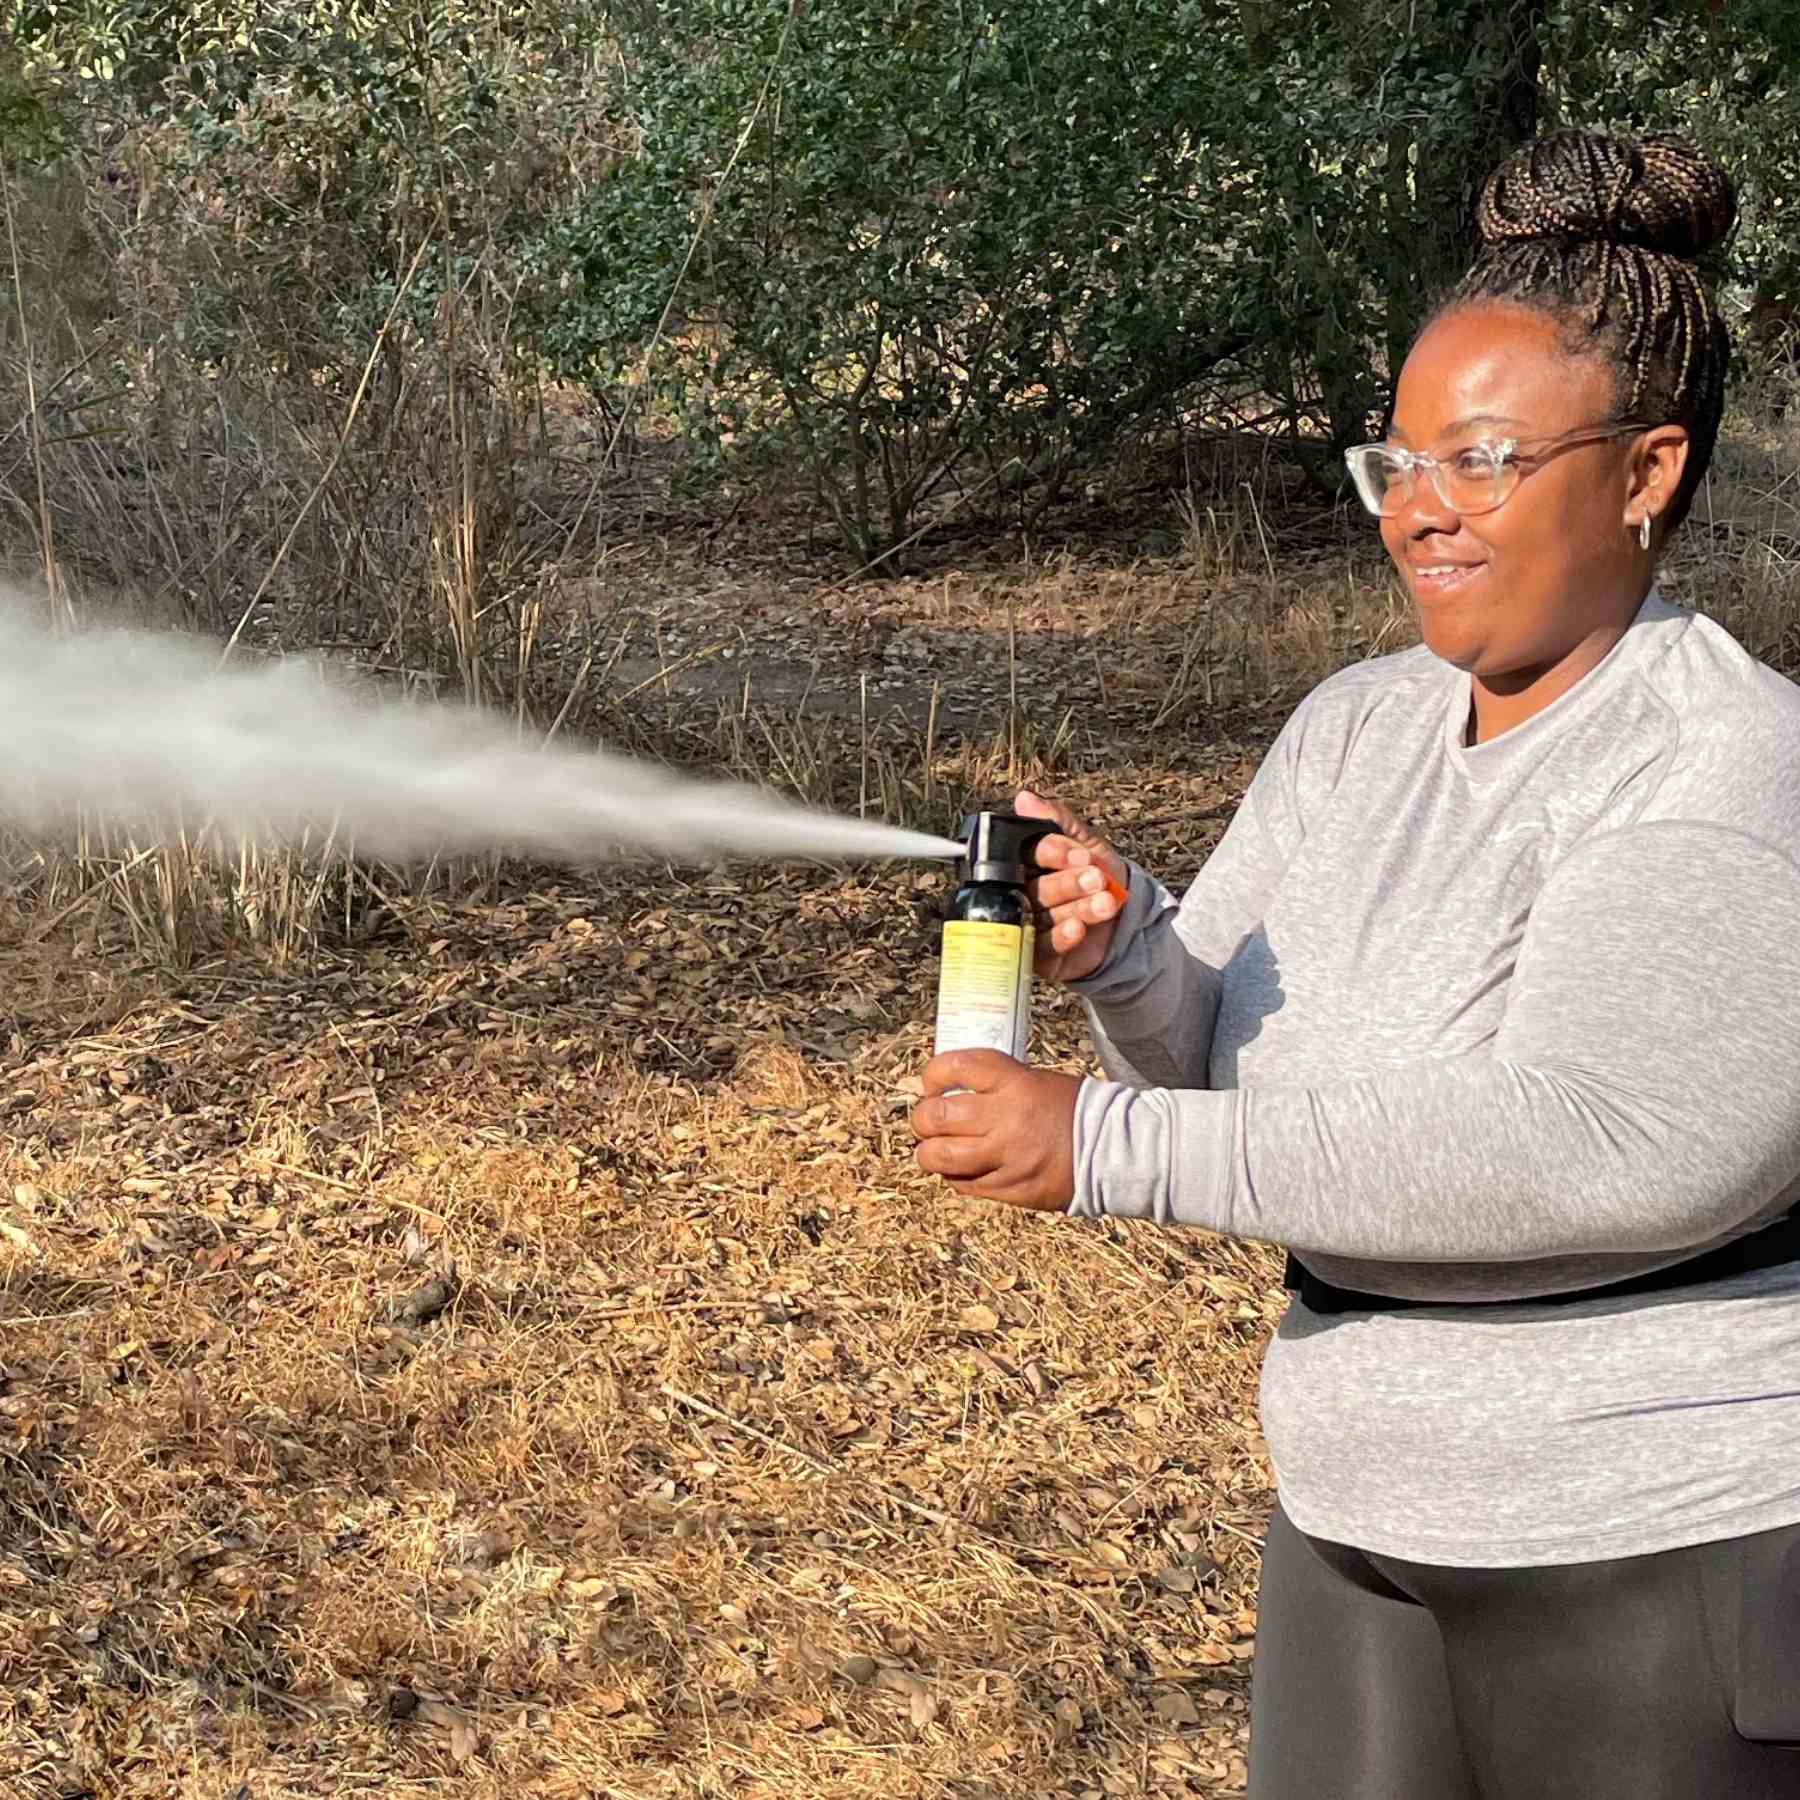 Woman spraying inert training canister.